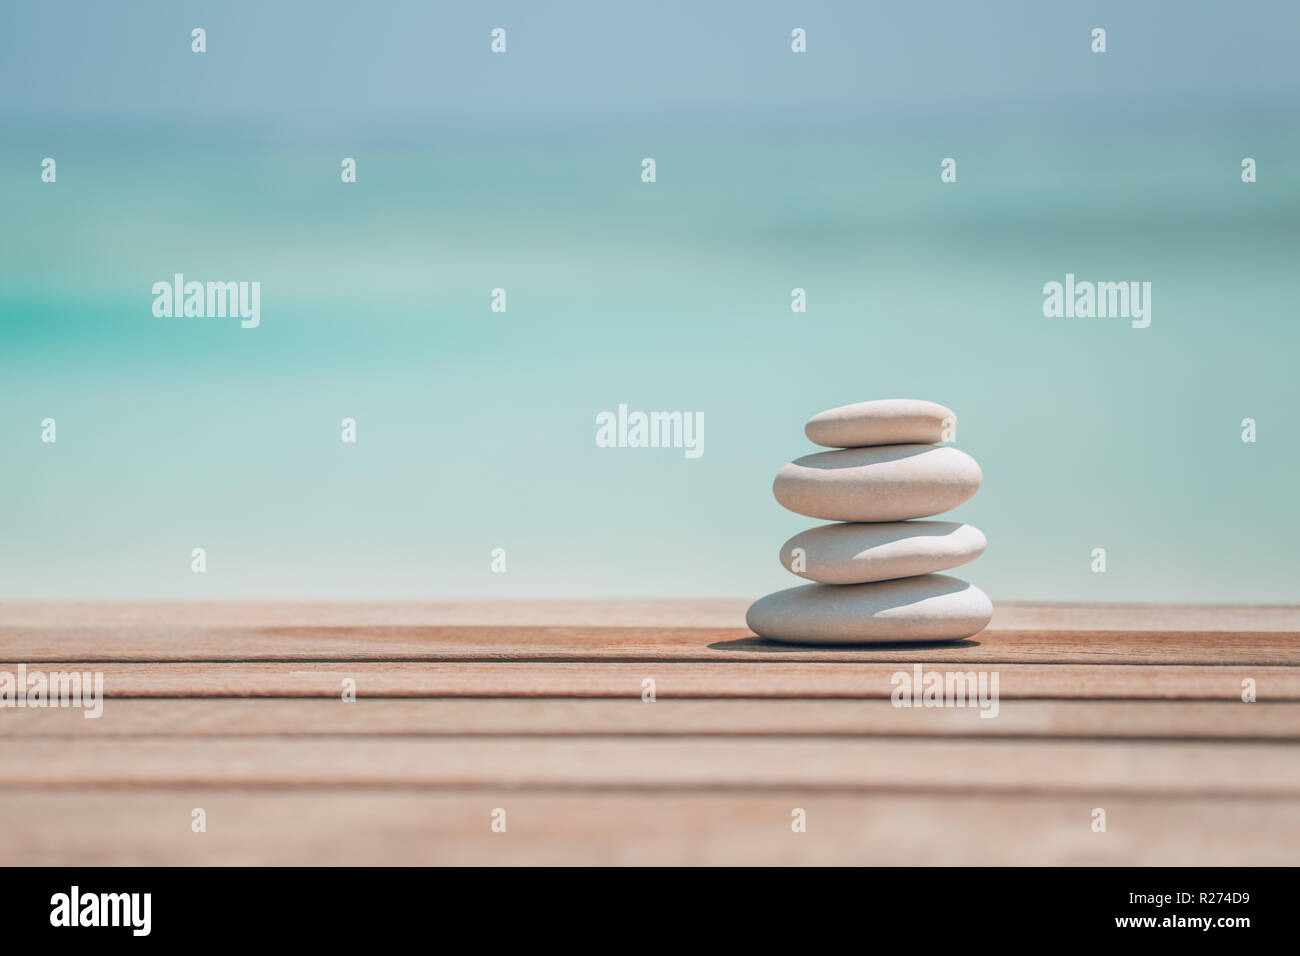 Zen stones on tropical beach for perfect meditation. Stones on soft sandy beach symbolizing stability, zen, relaxation, harmony, balance, inspiration Stock Photo